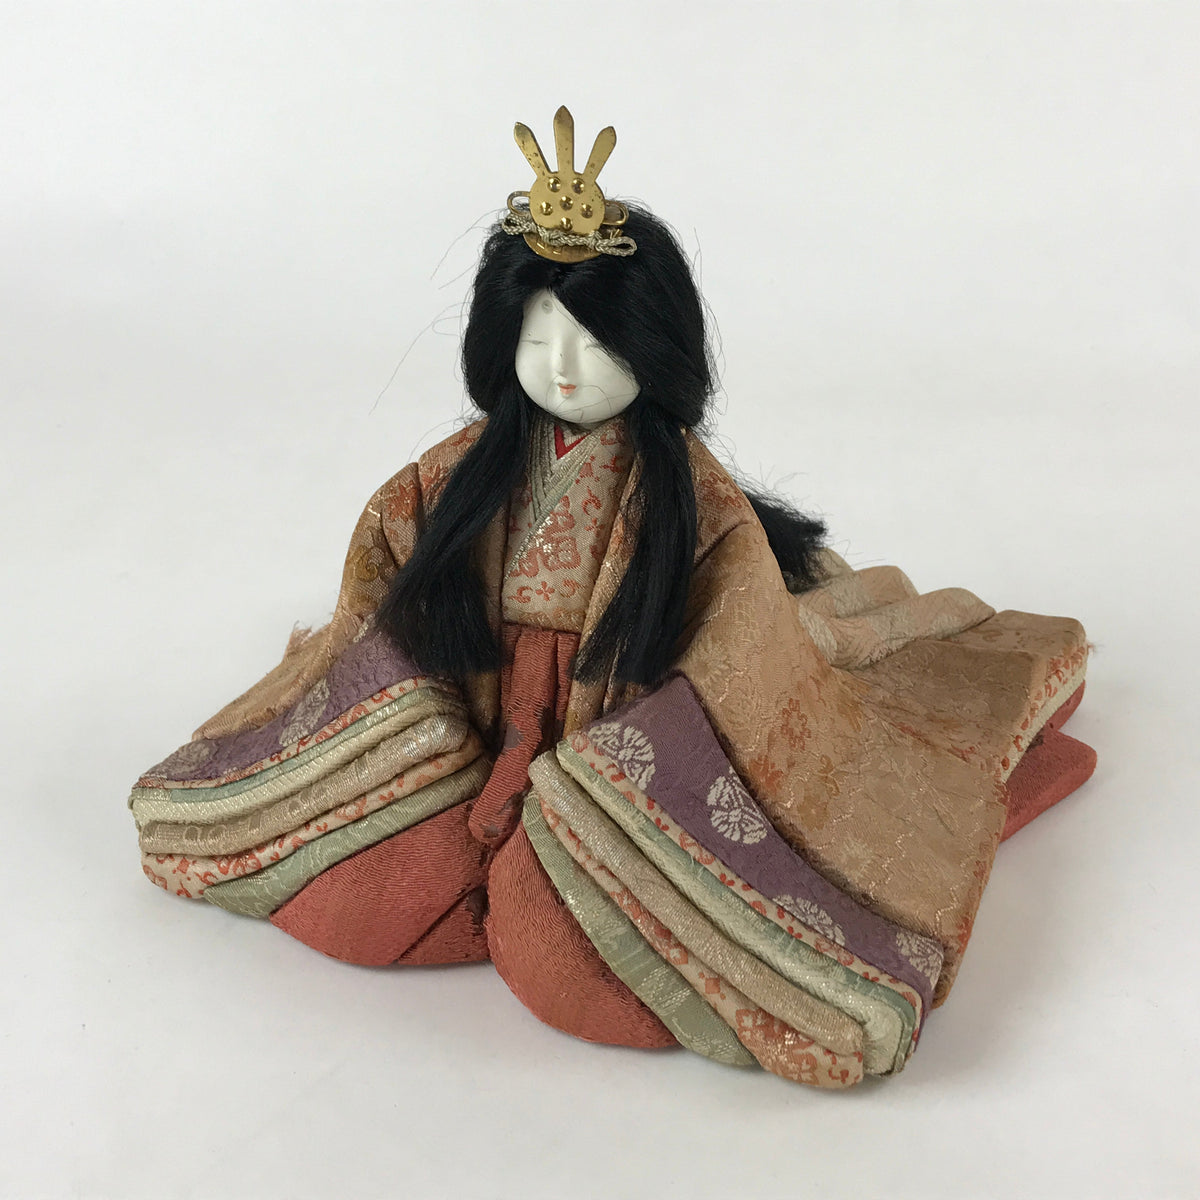 27cm Japanese Kimono Geisha Figurine Home Decoration